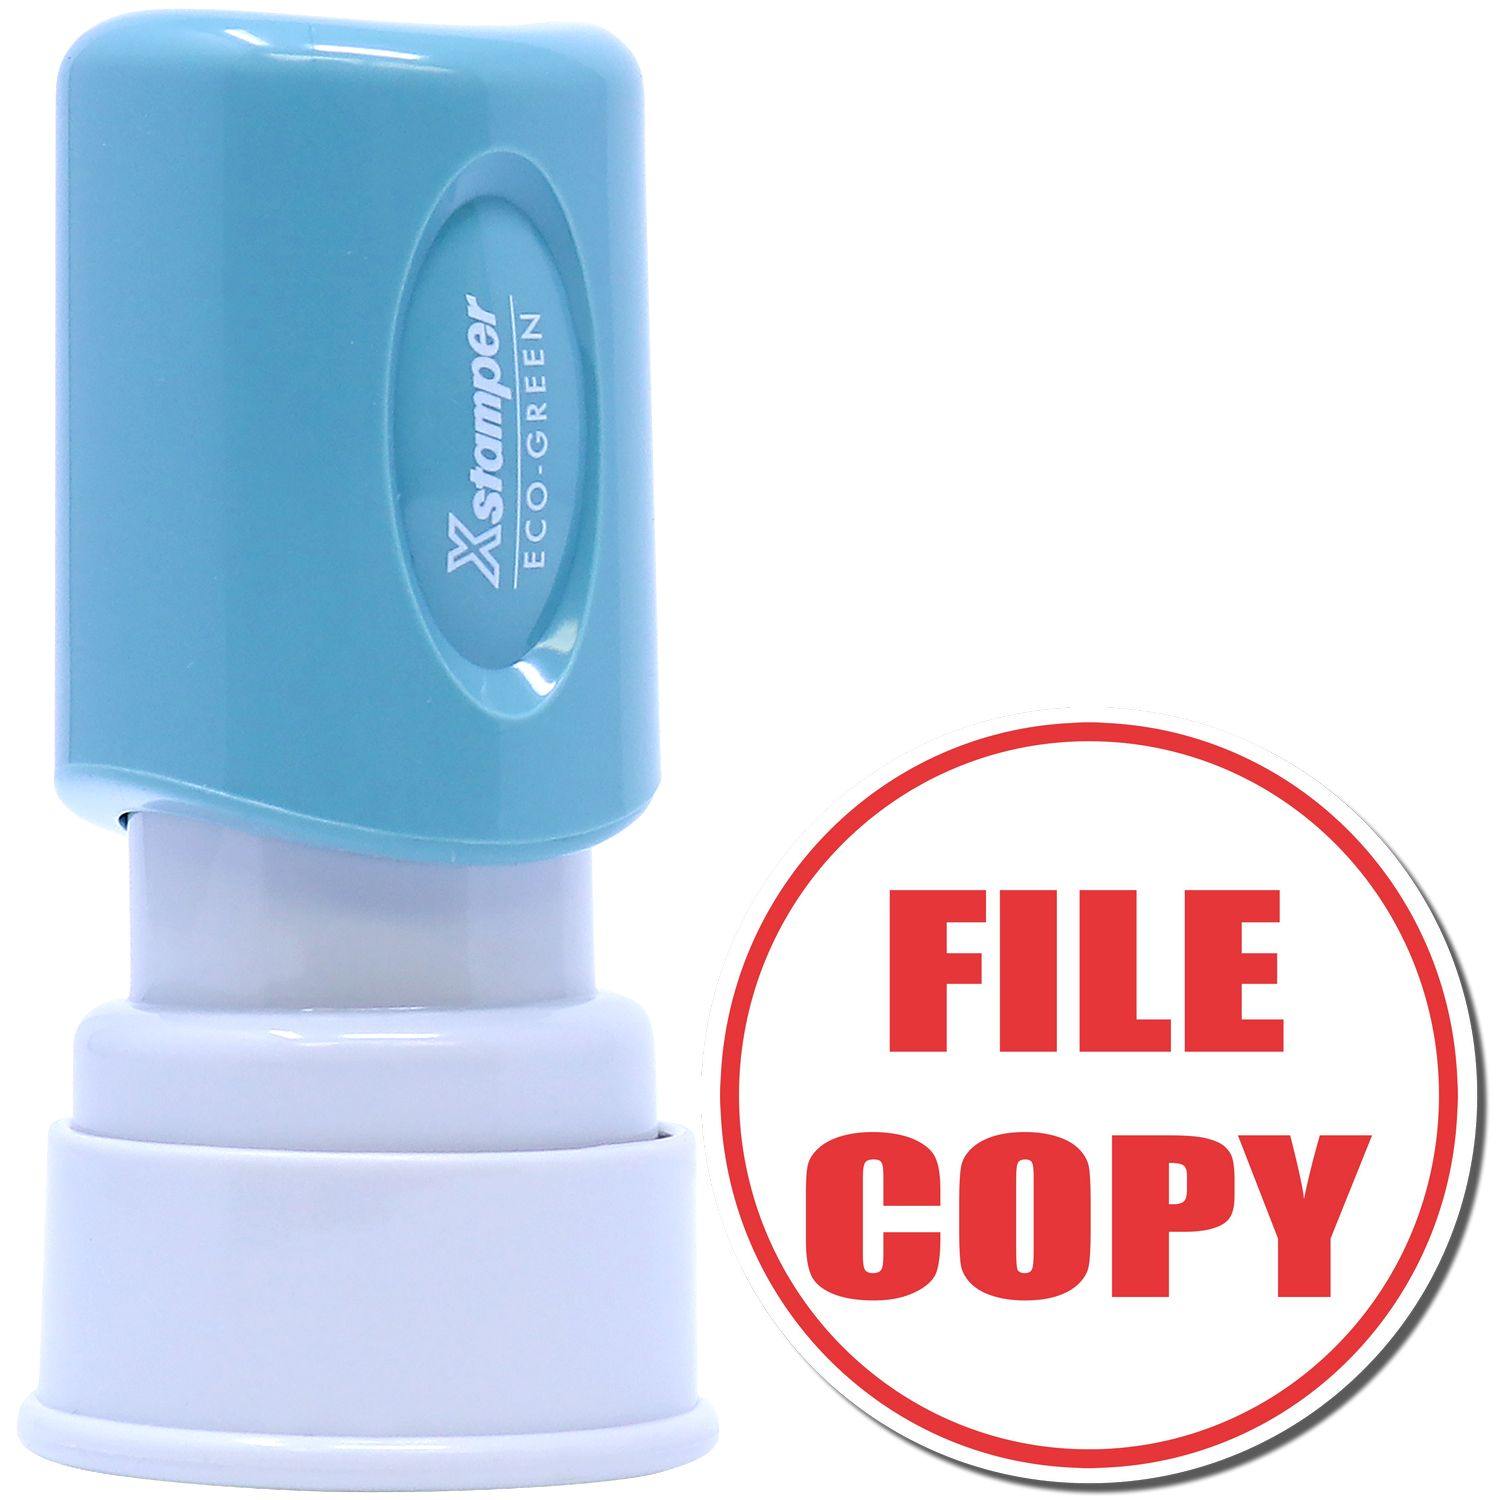 Round File Copy Xstamper Stamp Main Image